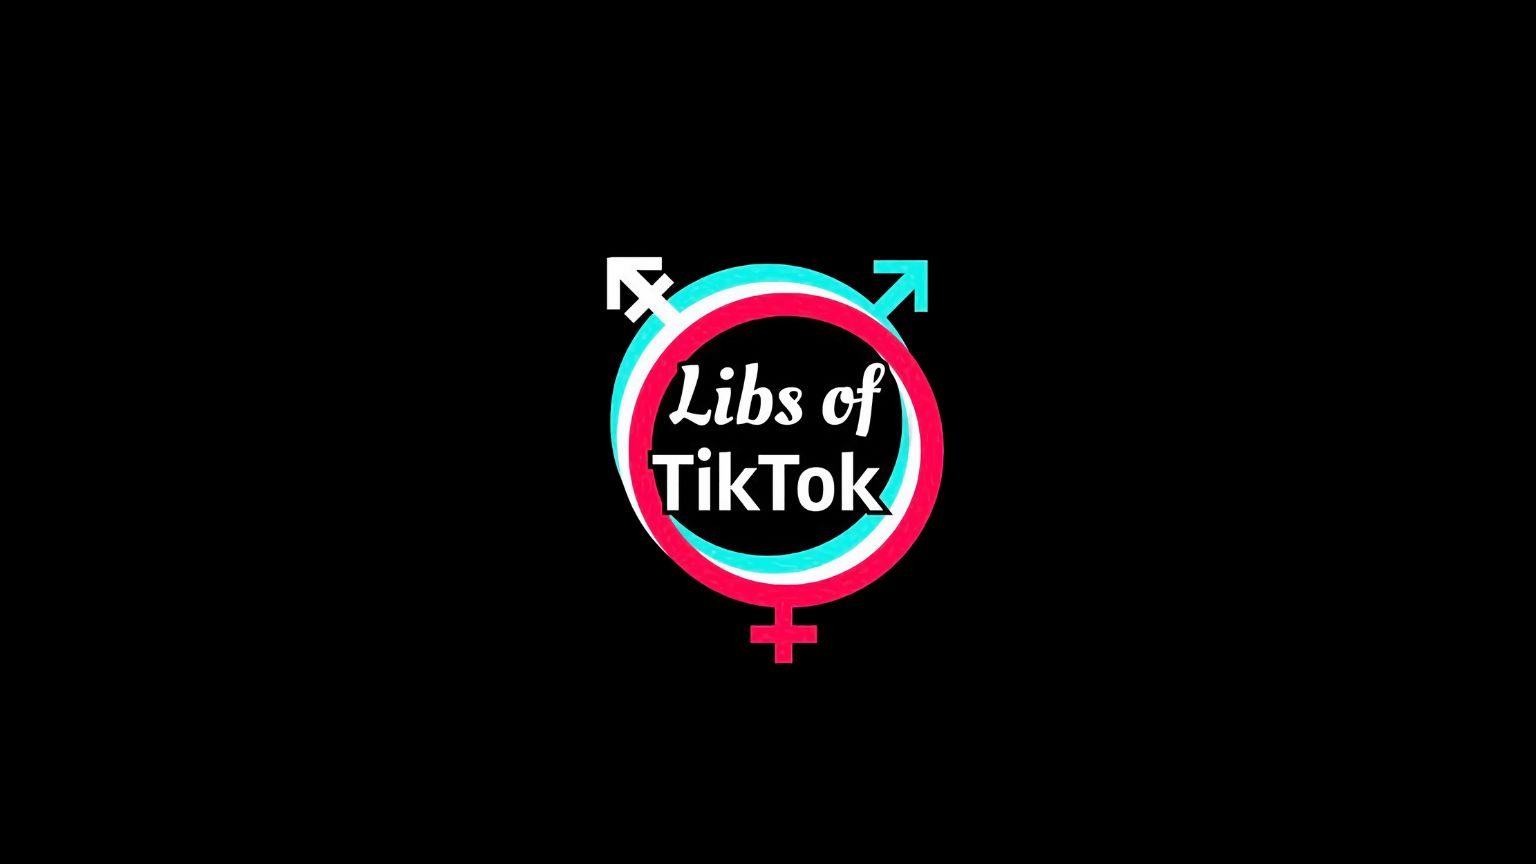 Newsletter Company Aweber Deplatforms Libs of TikTok